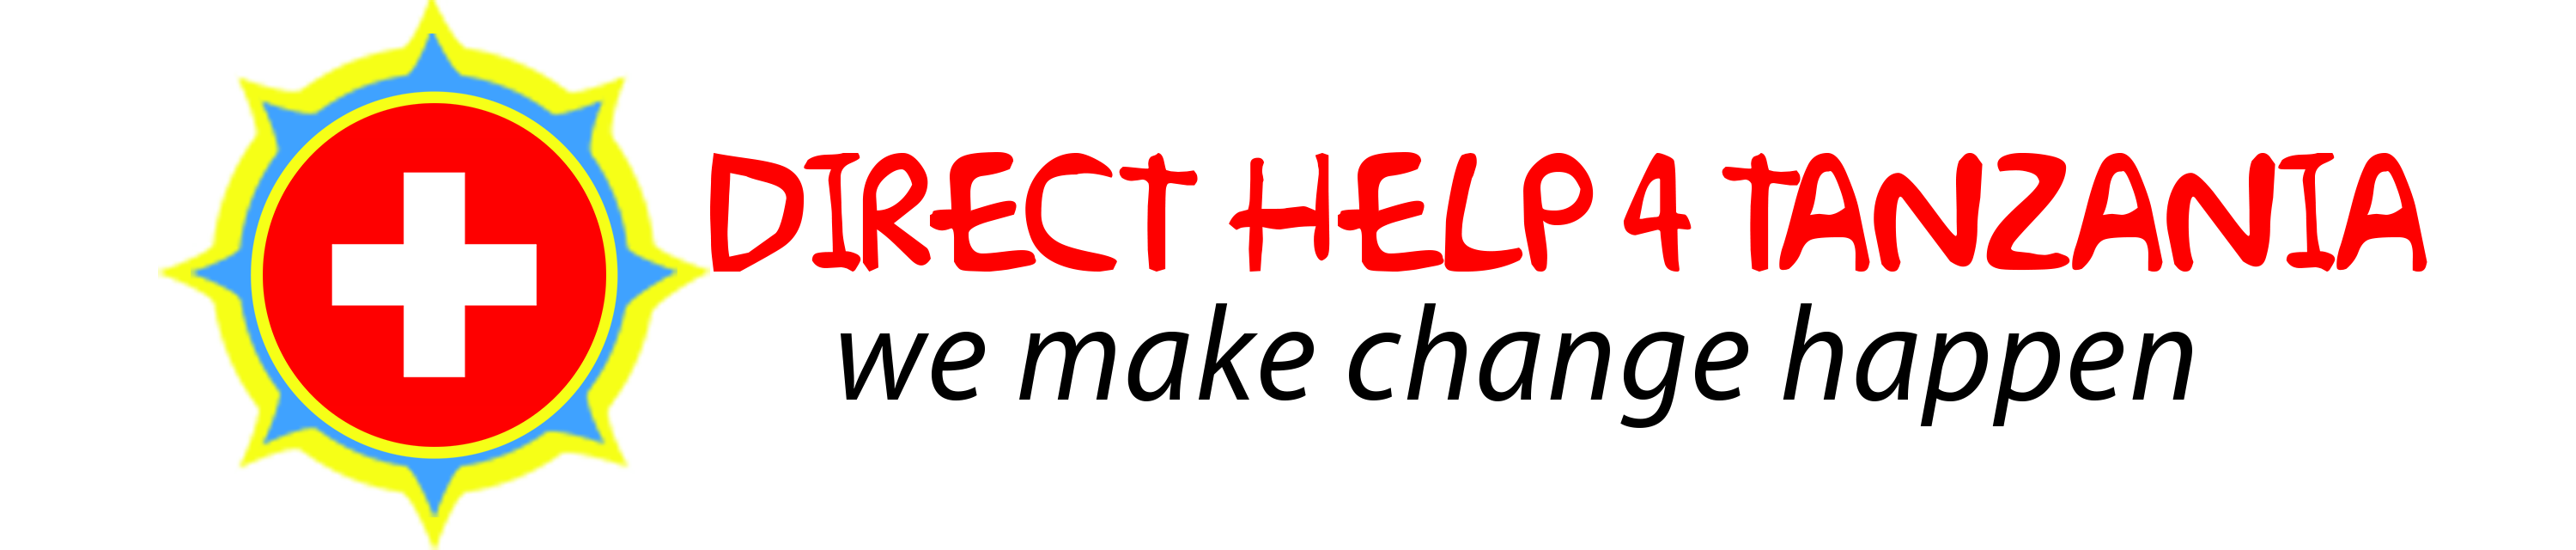 Direct Help 4 Tanzania Logo